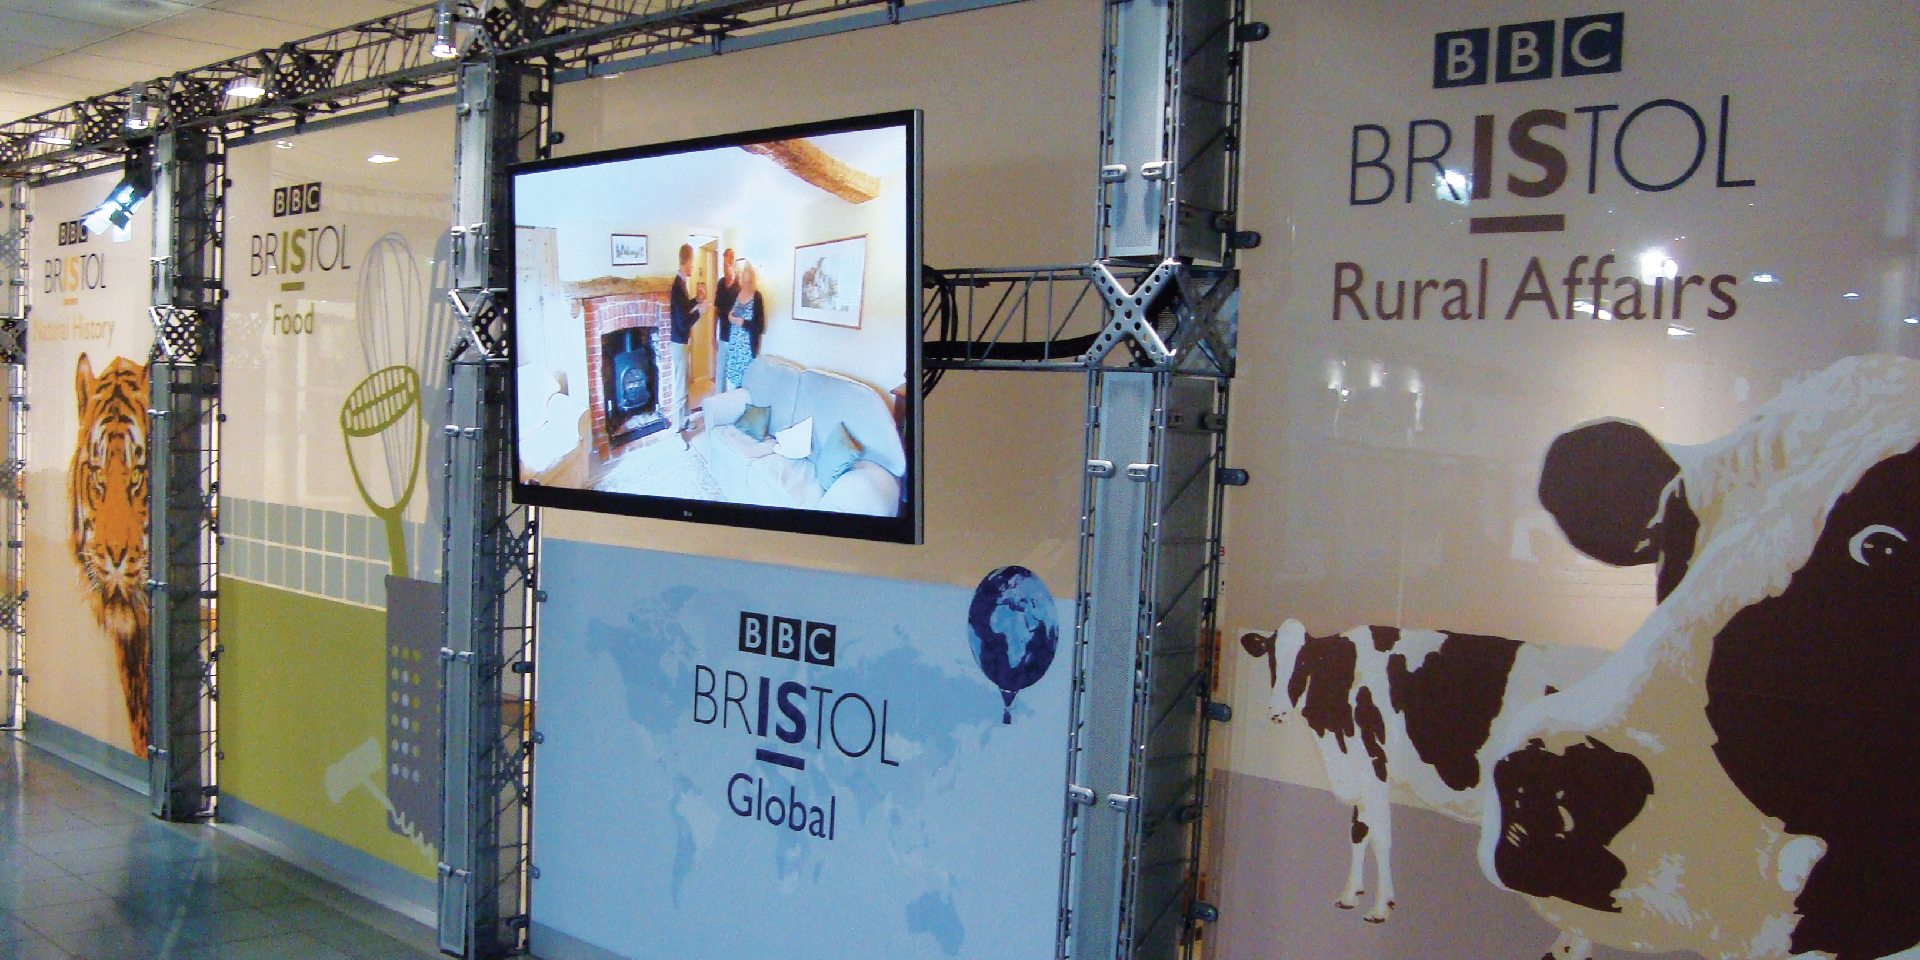 BBC Bristol reception Graphics